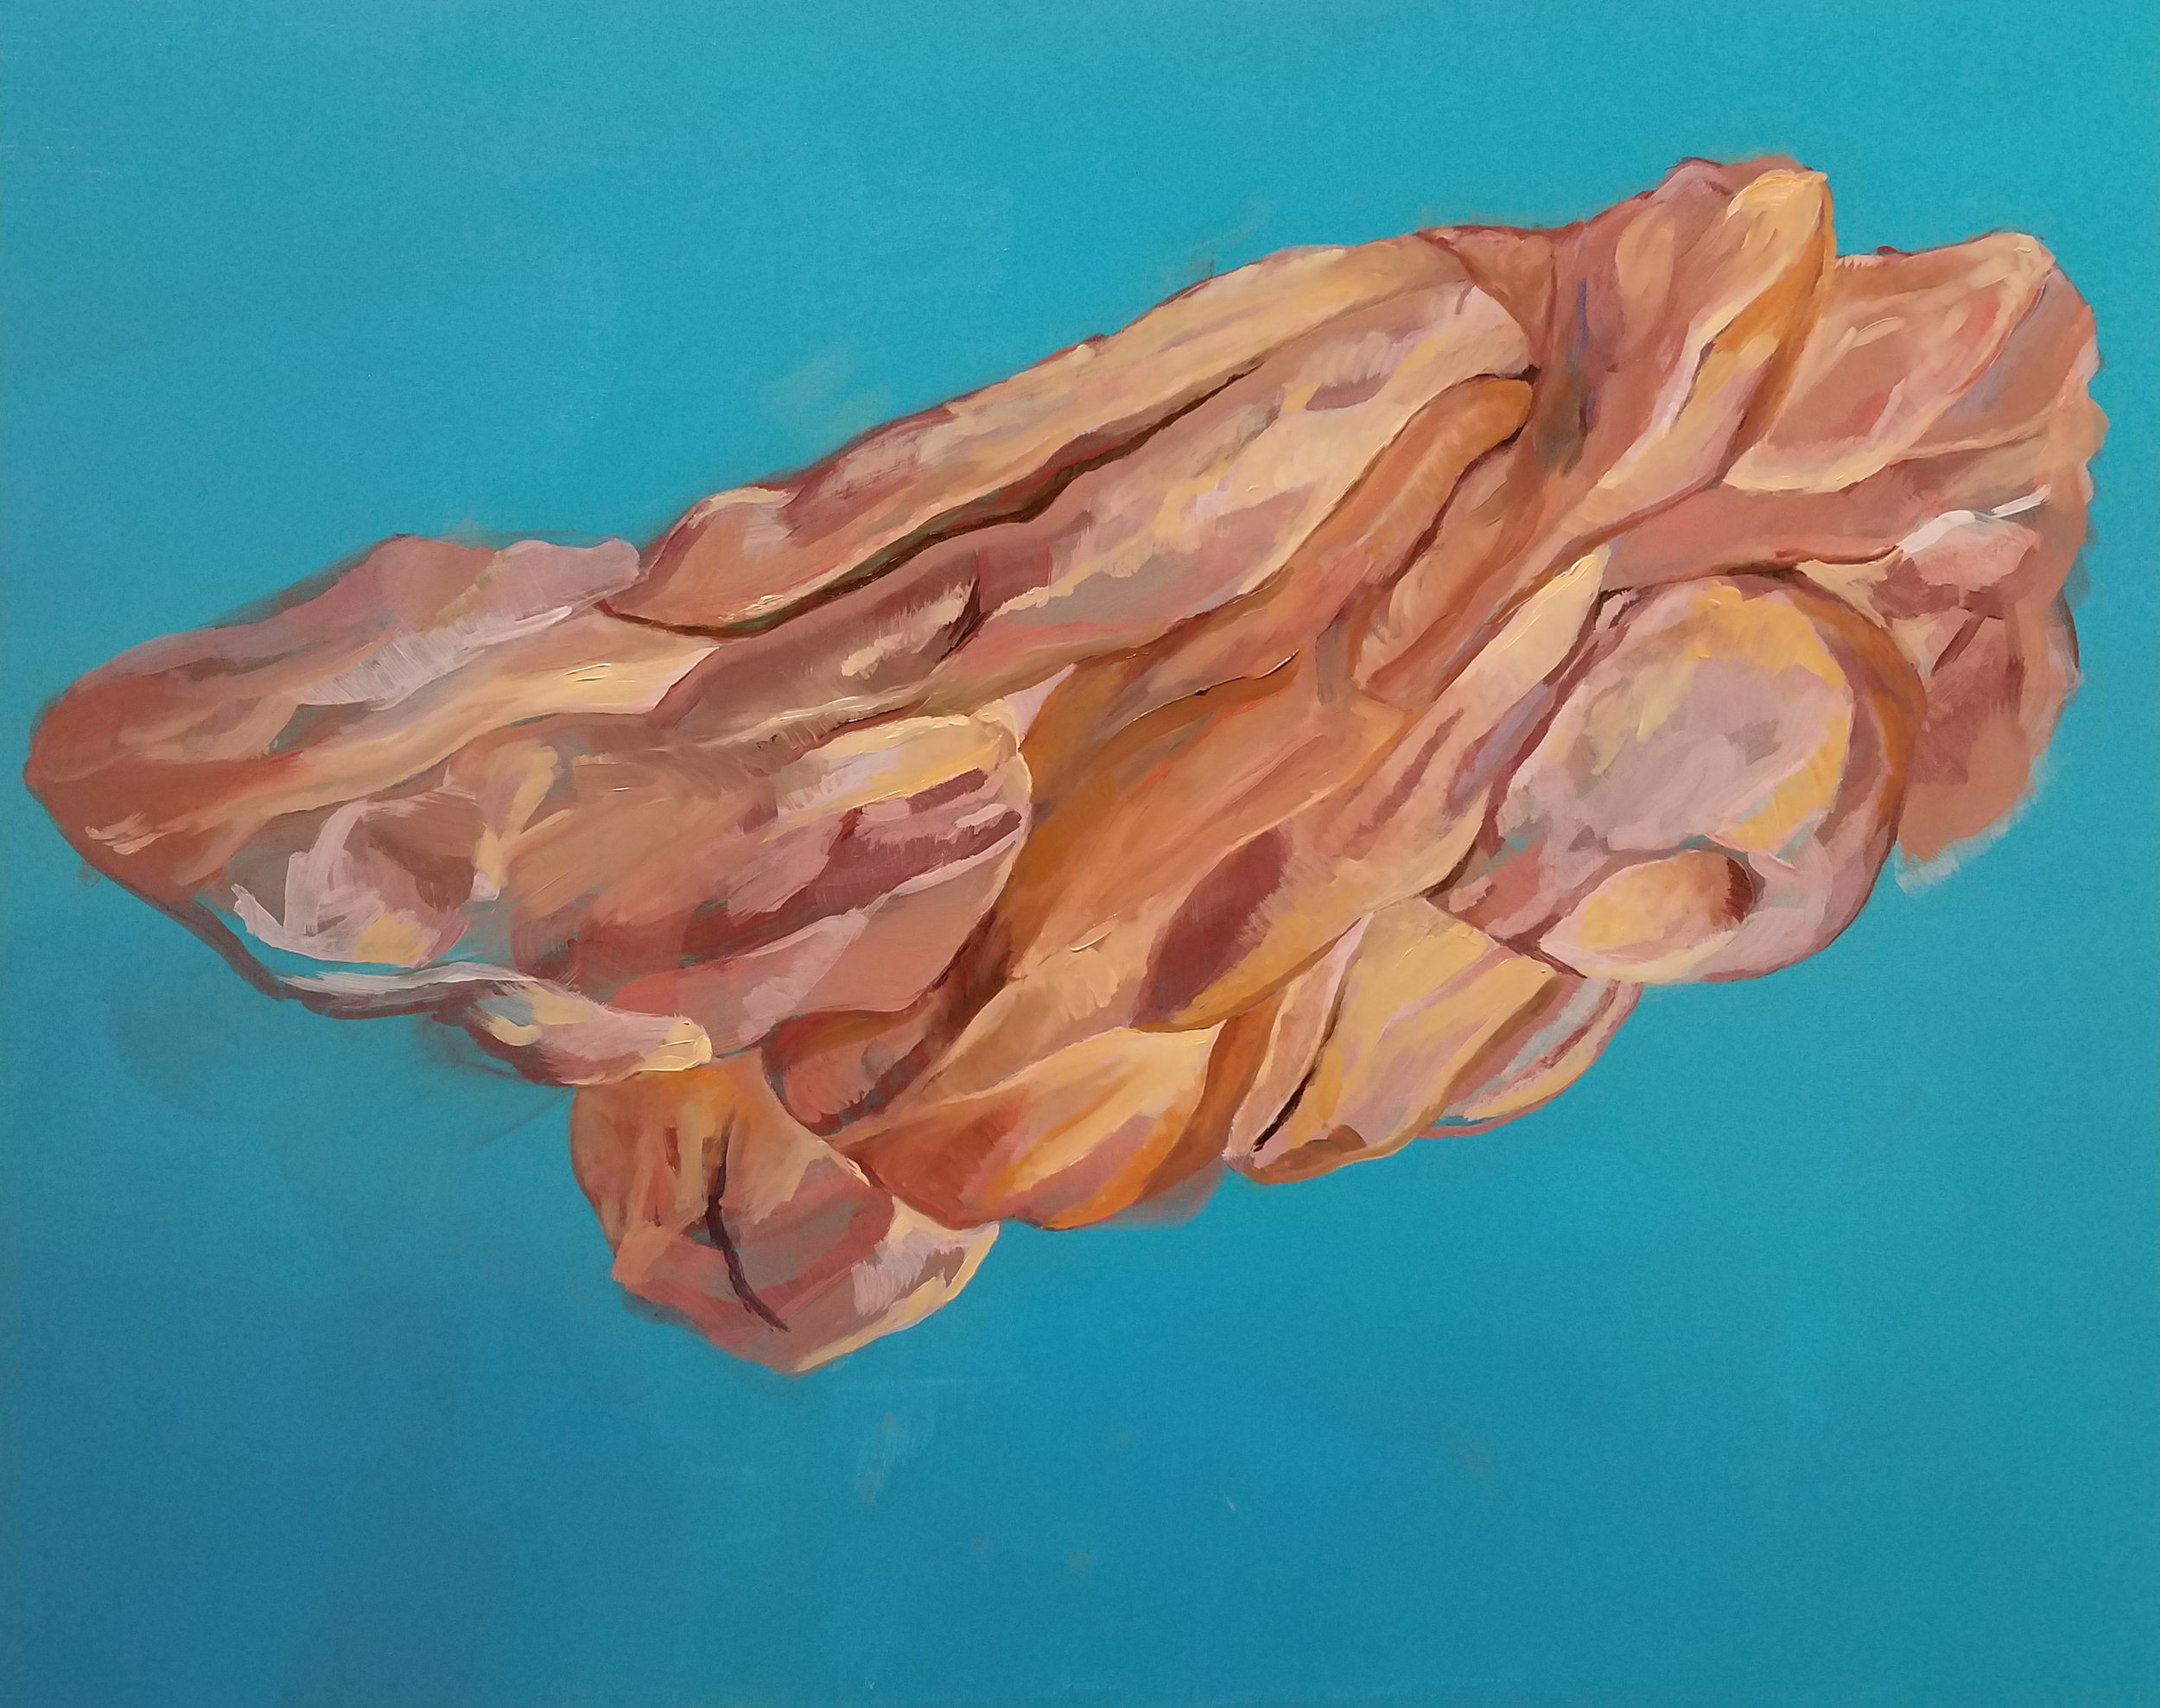   Petrified Self , acrylic and oil on panel, 16” x 20”, 2017 